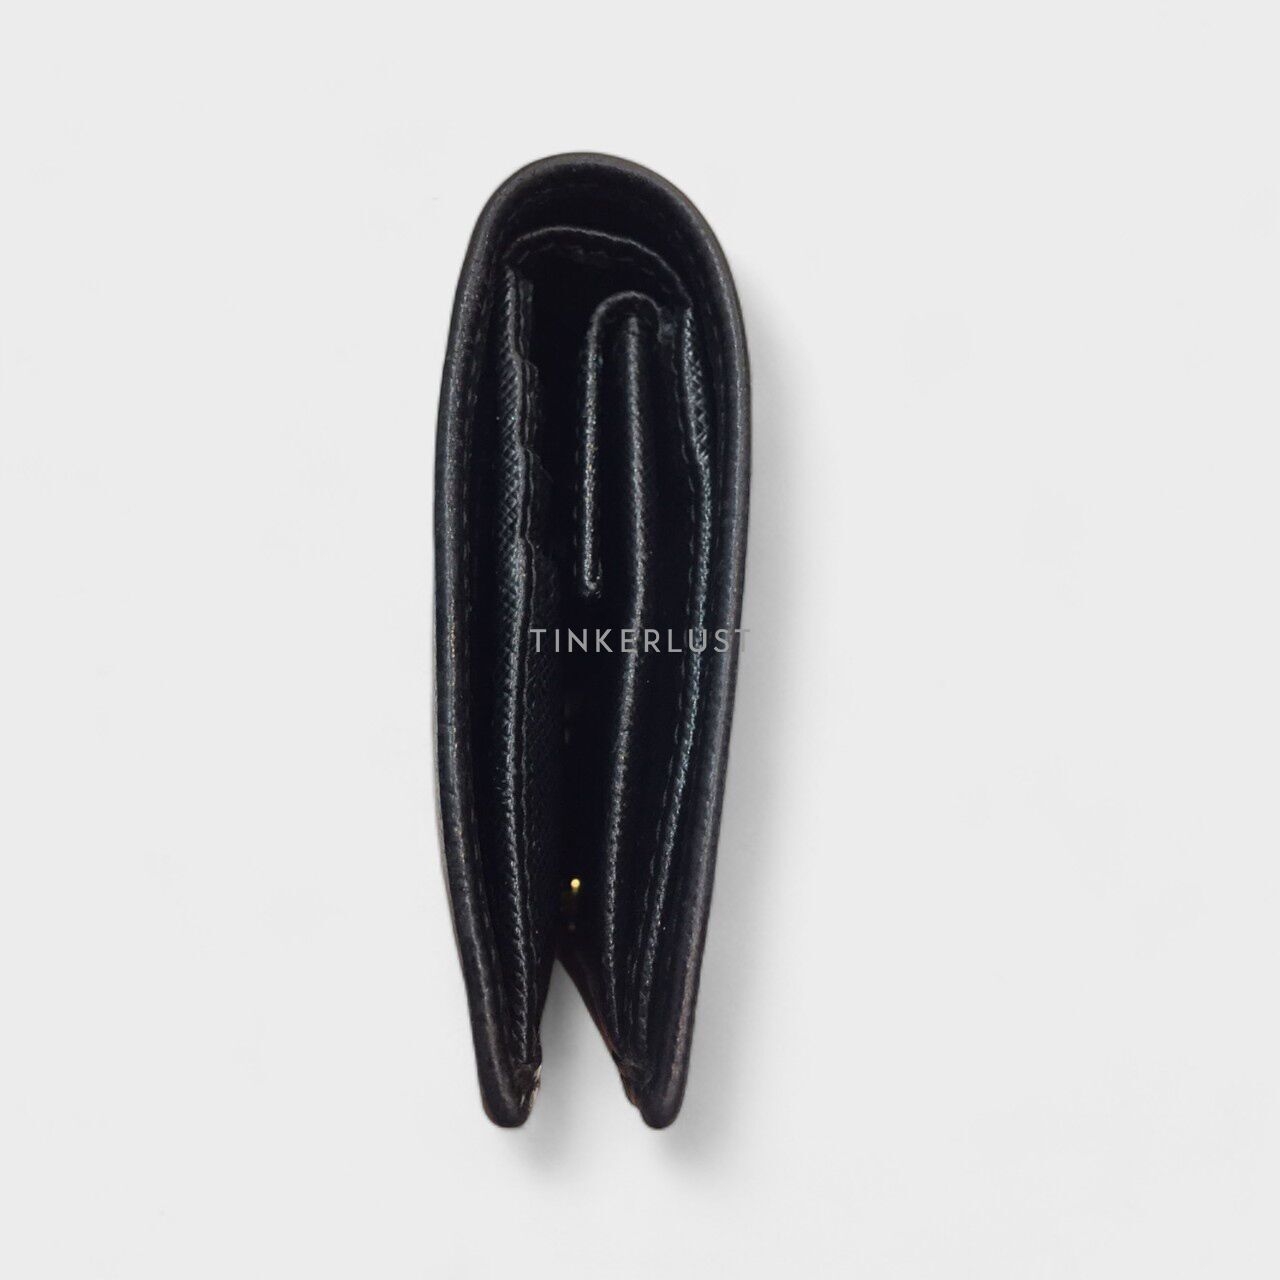 Prada Saffiano Leather Black Compact Wallet